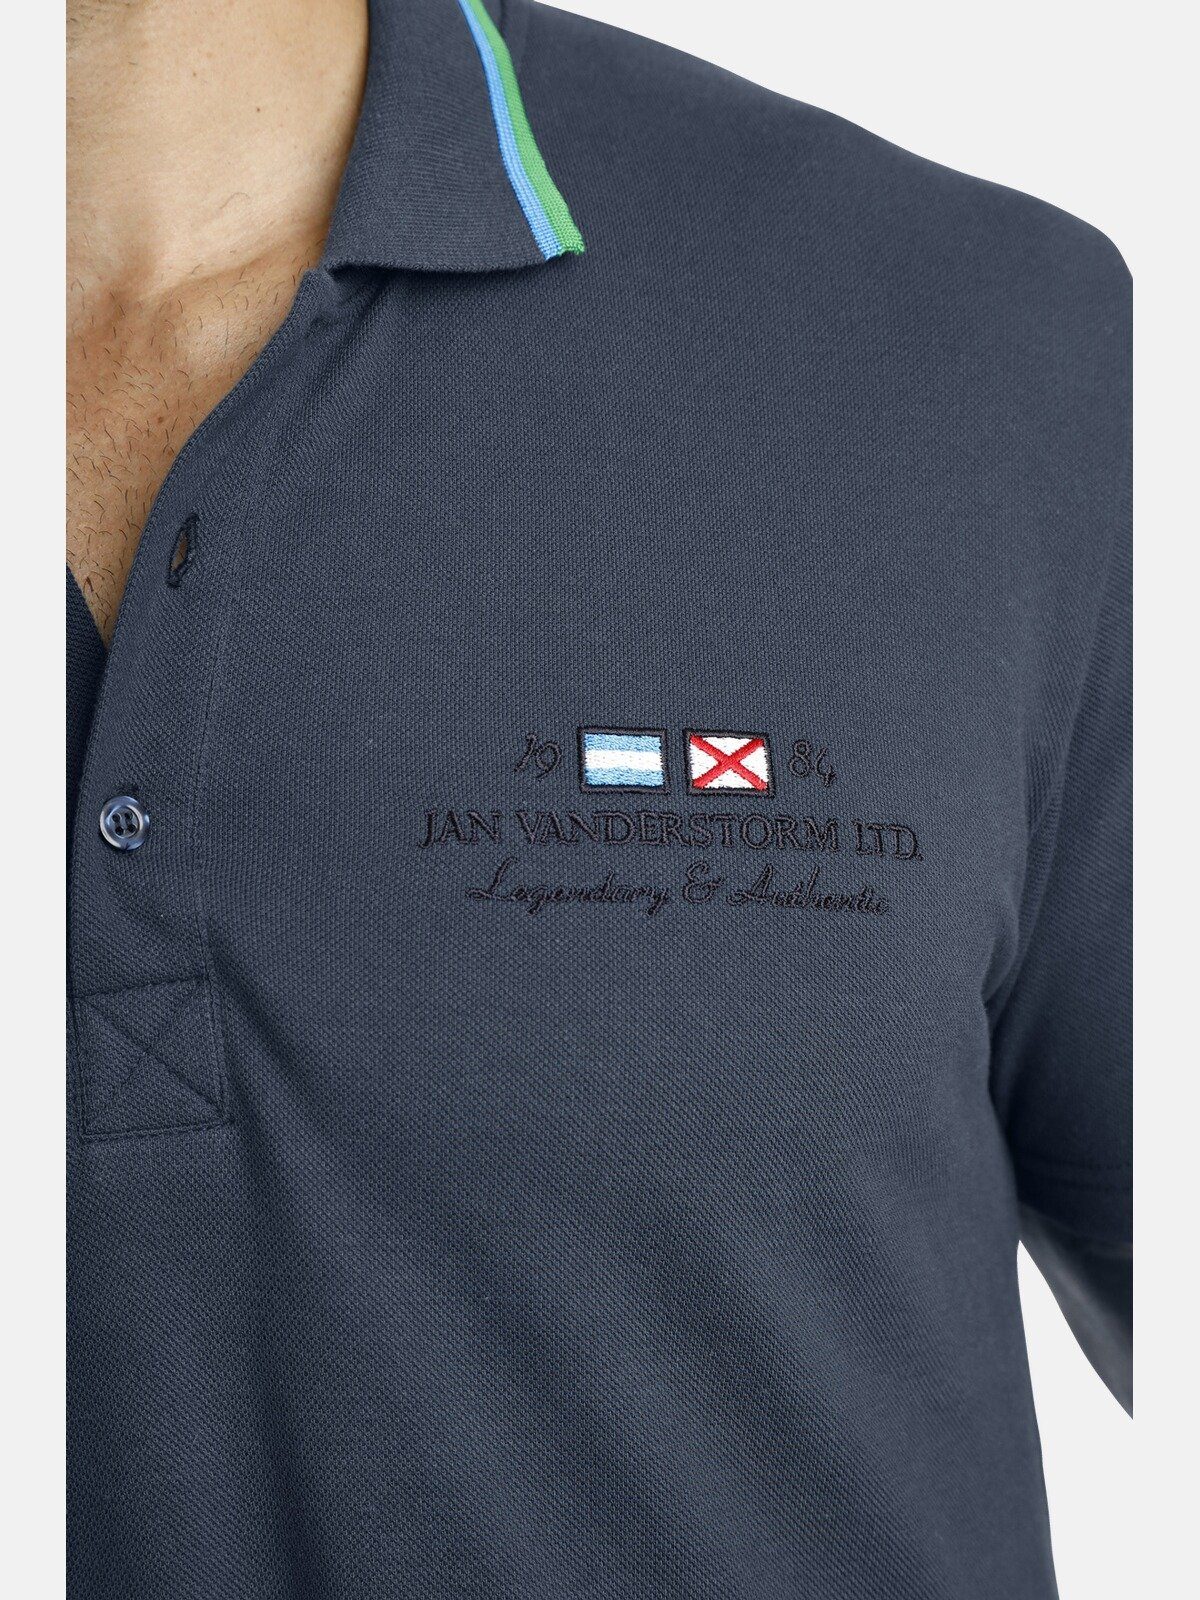 Jan Kragen am HJORD Vanderstorm Poloshirt Kontraststreifen